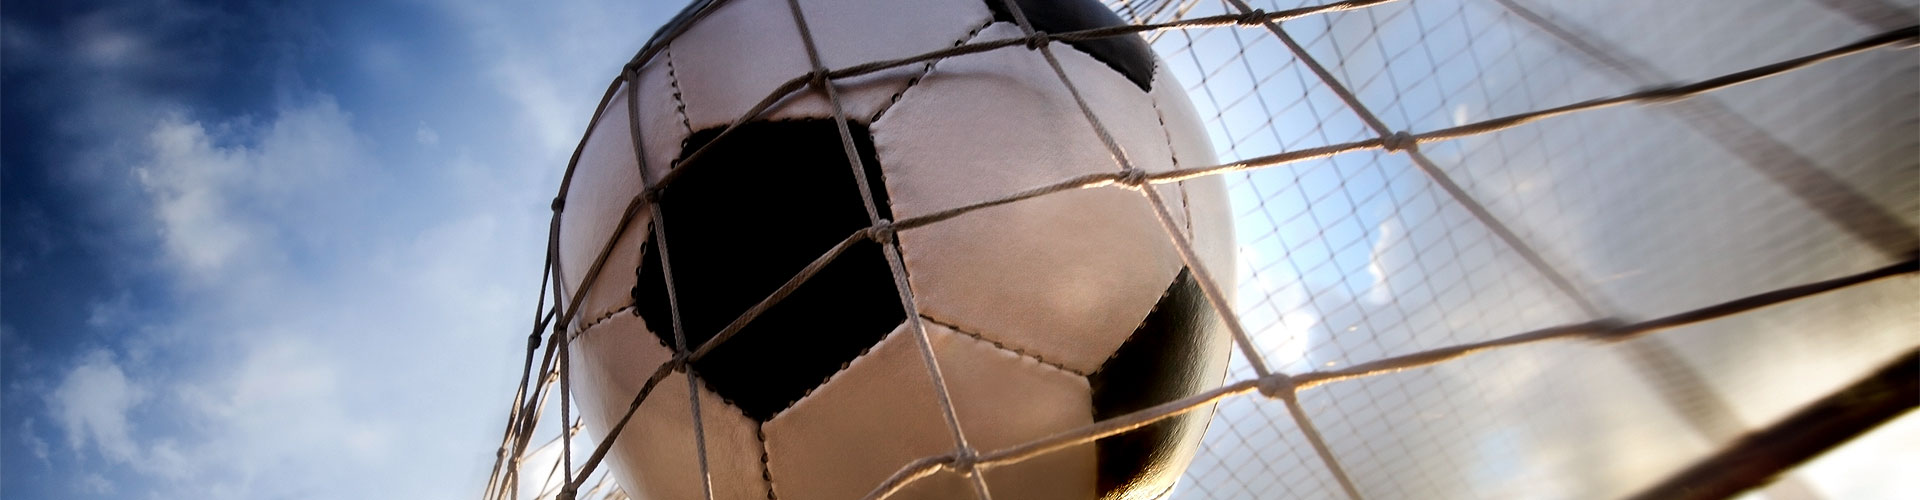 Ver la Eurocopa 2020 de fútbol en vivo en Villavieja del Lozoya